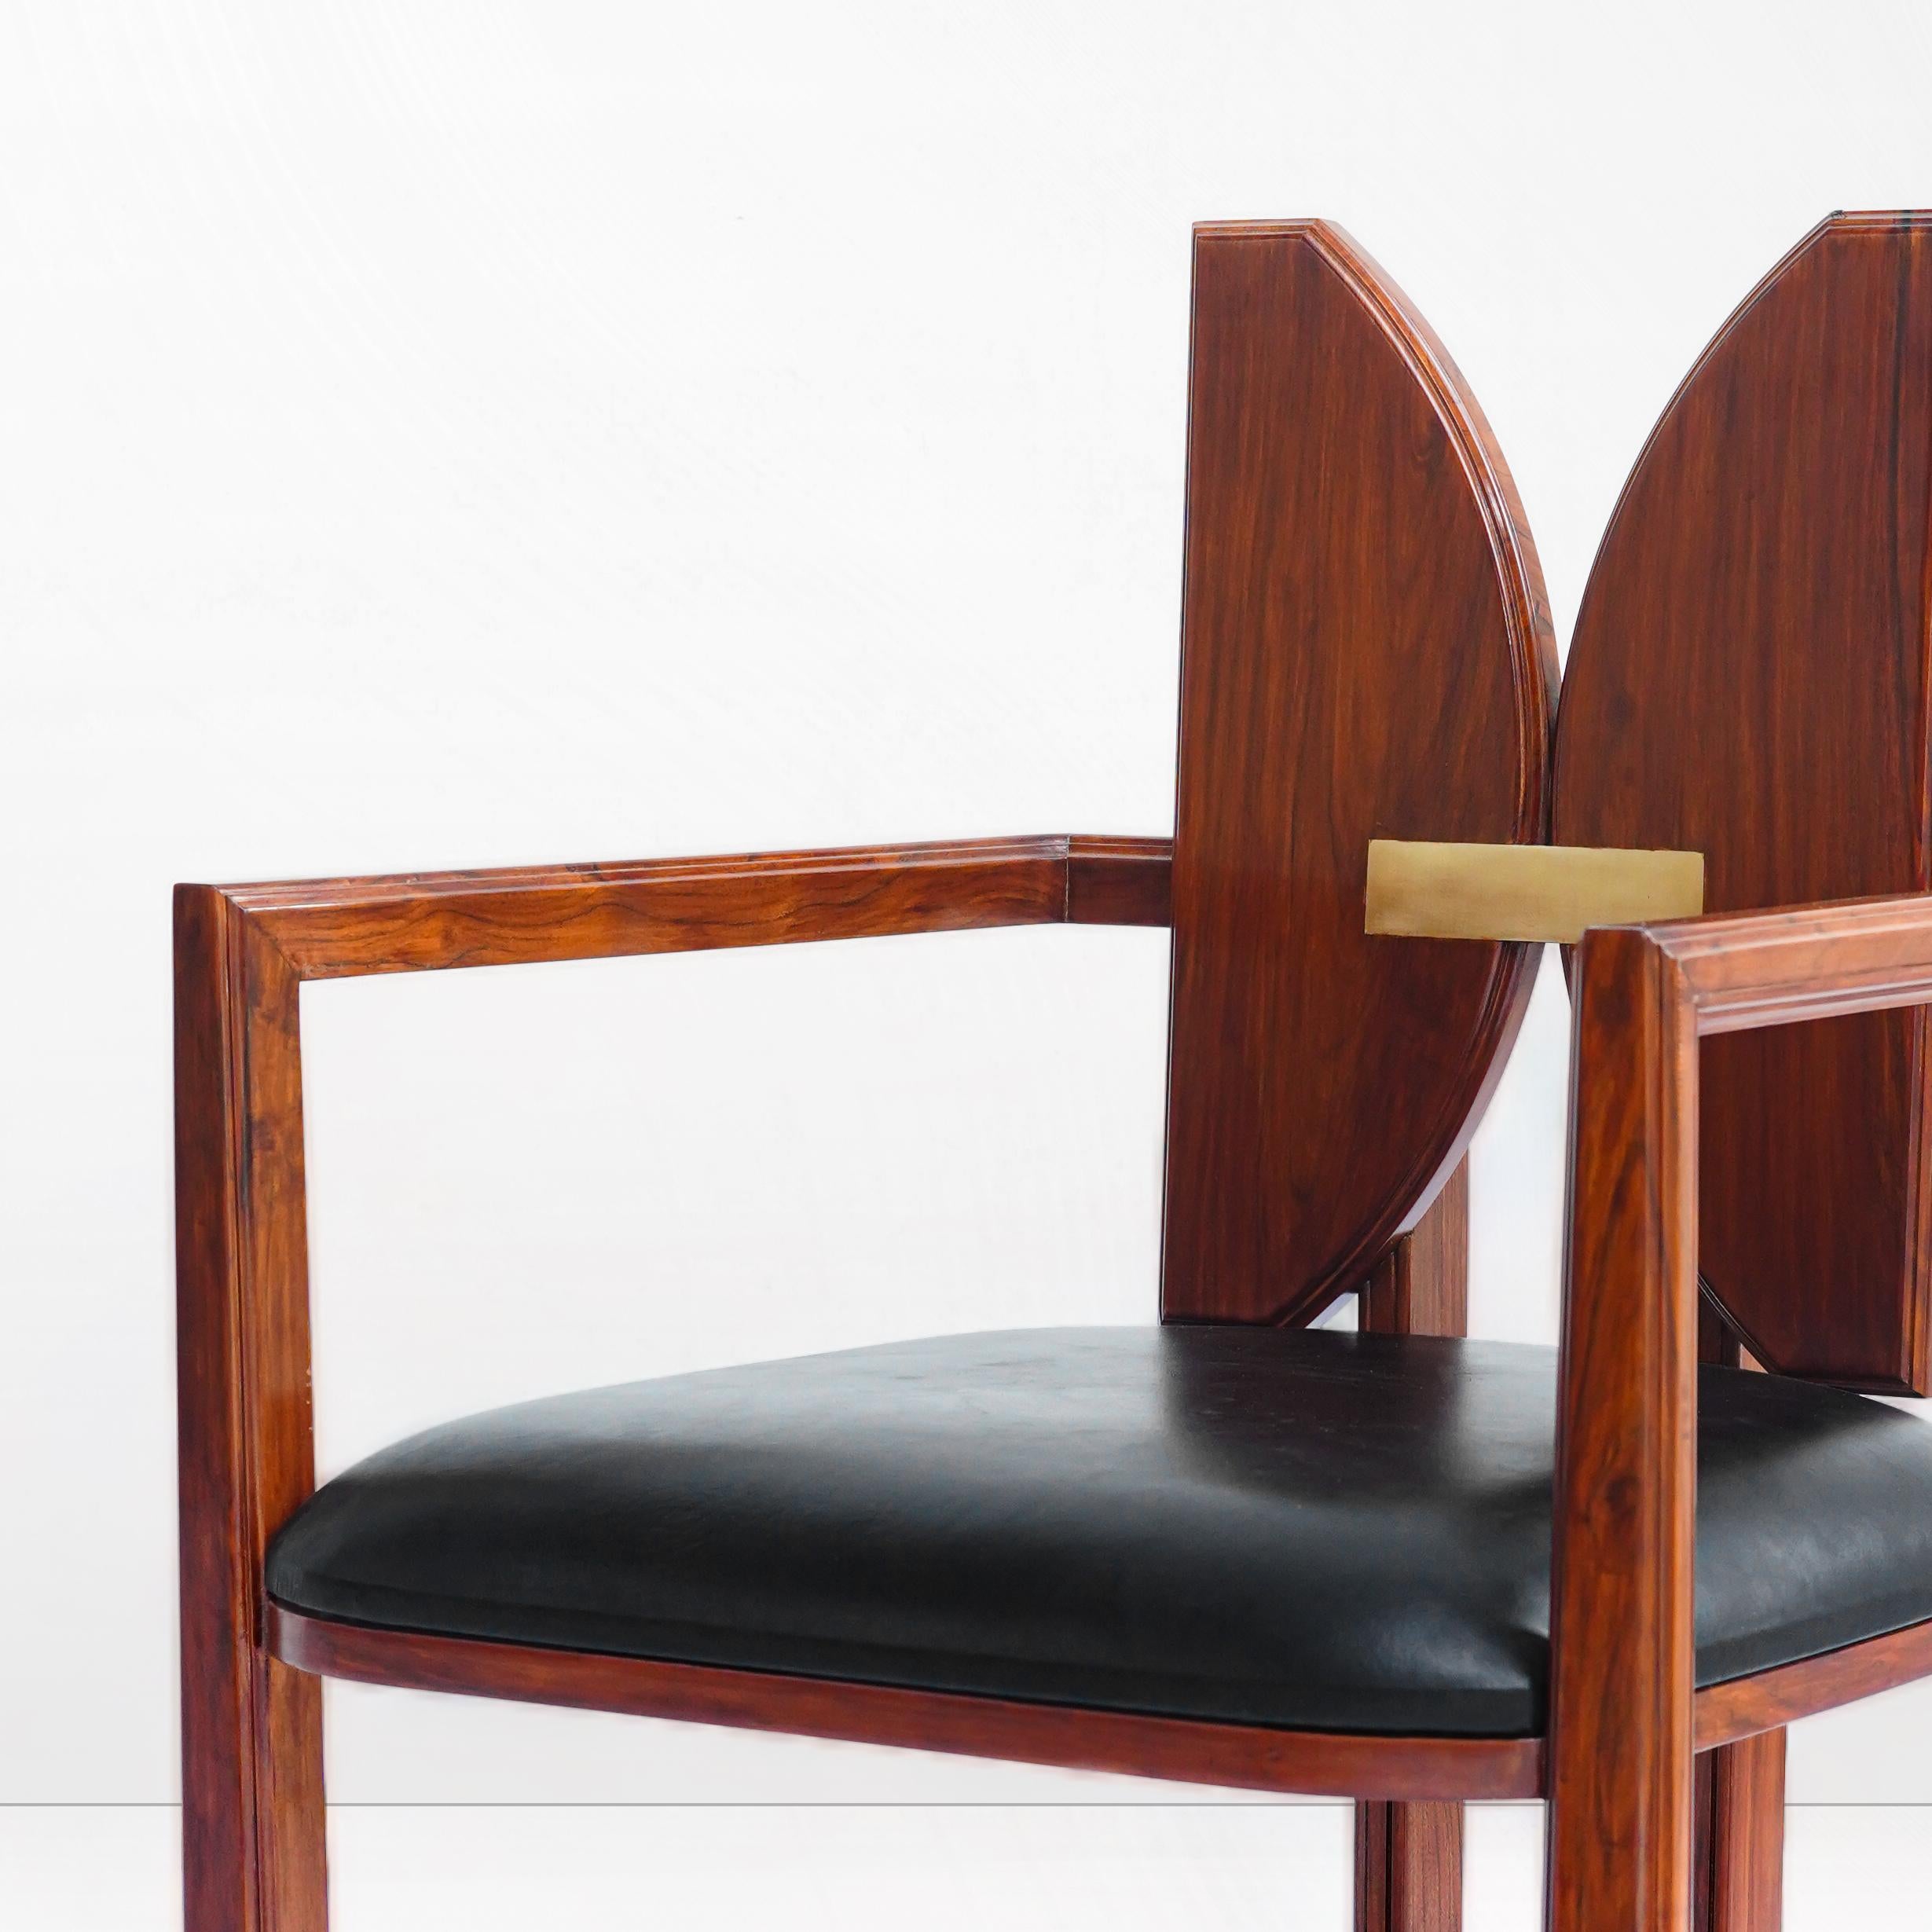 Pakistani original, Geometric, transitional style, art nouveau, bold, modern dining chair For Sale